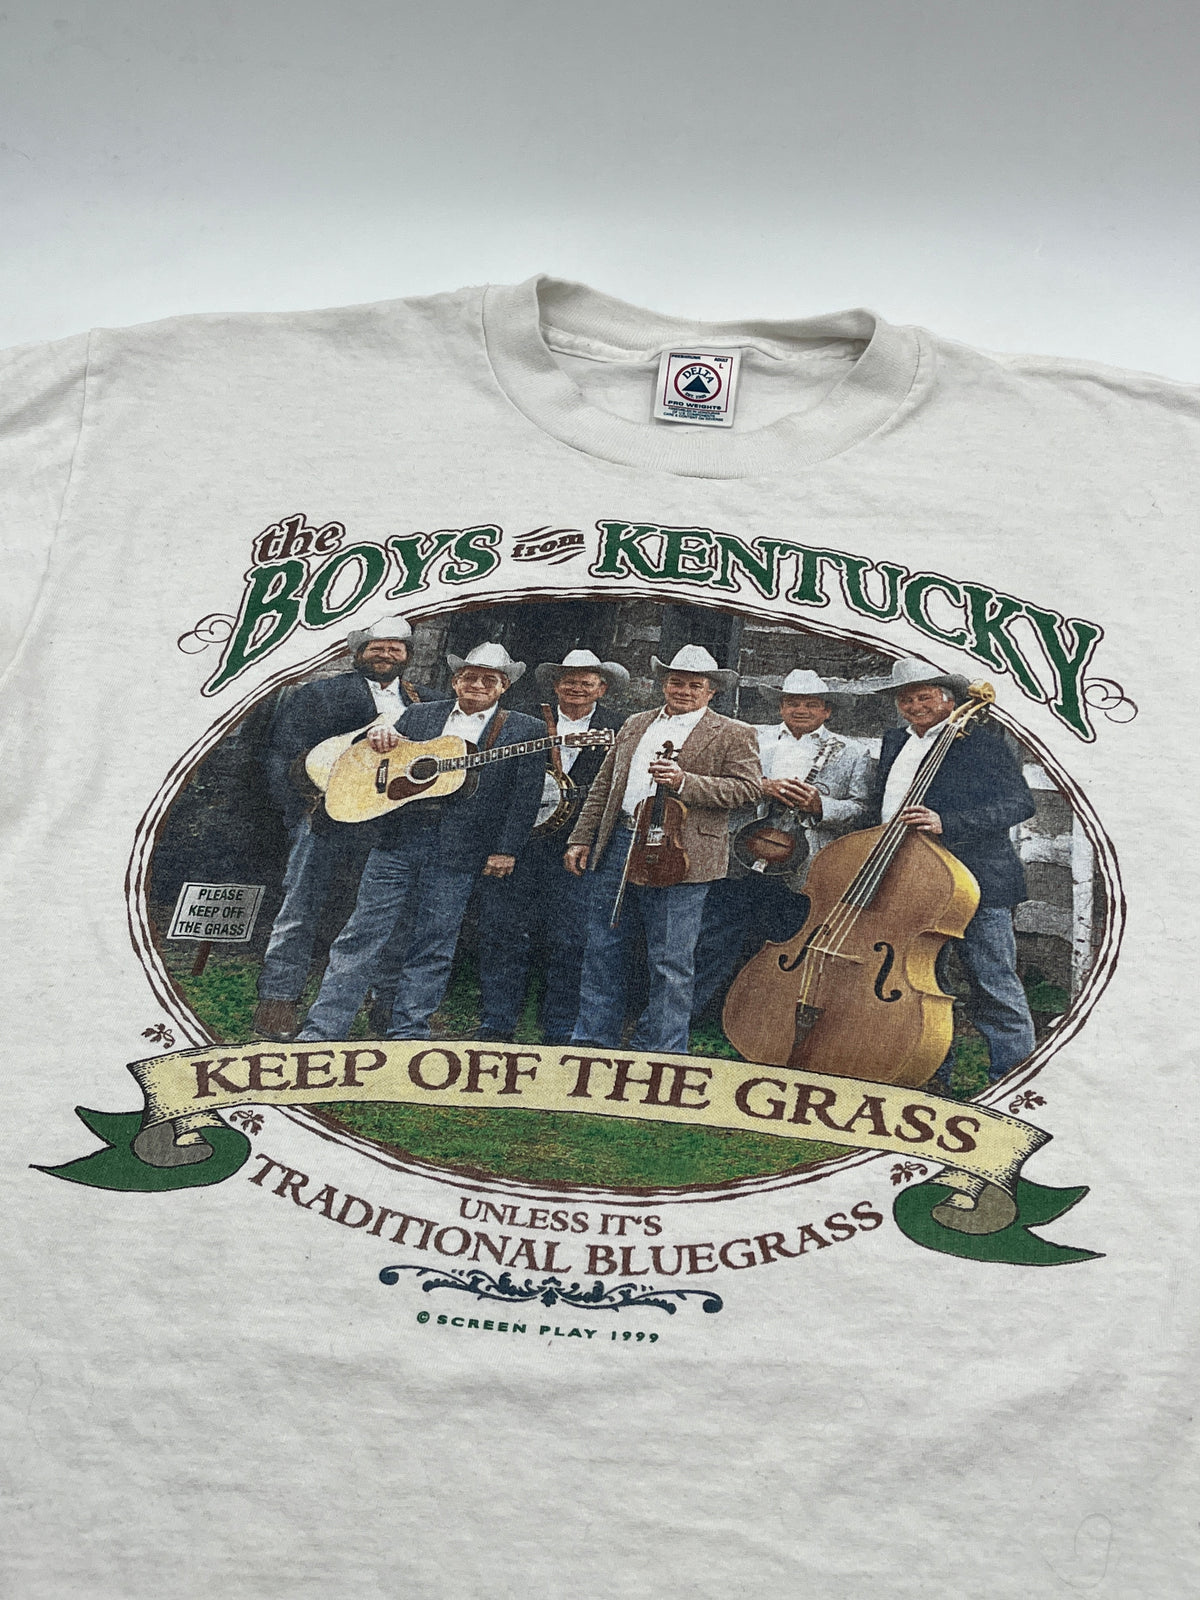 Vintage Boys of Kentucky Band Tee